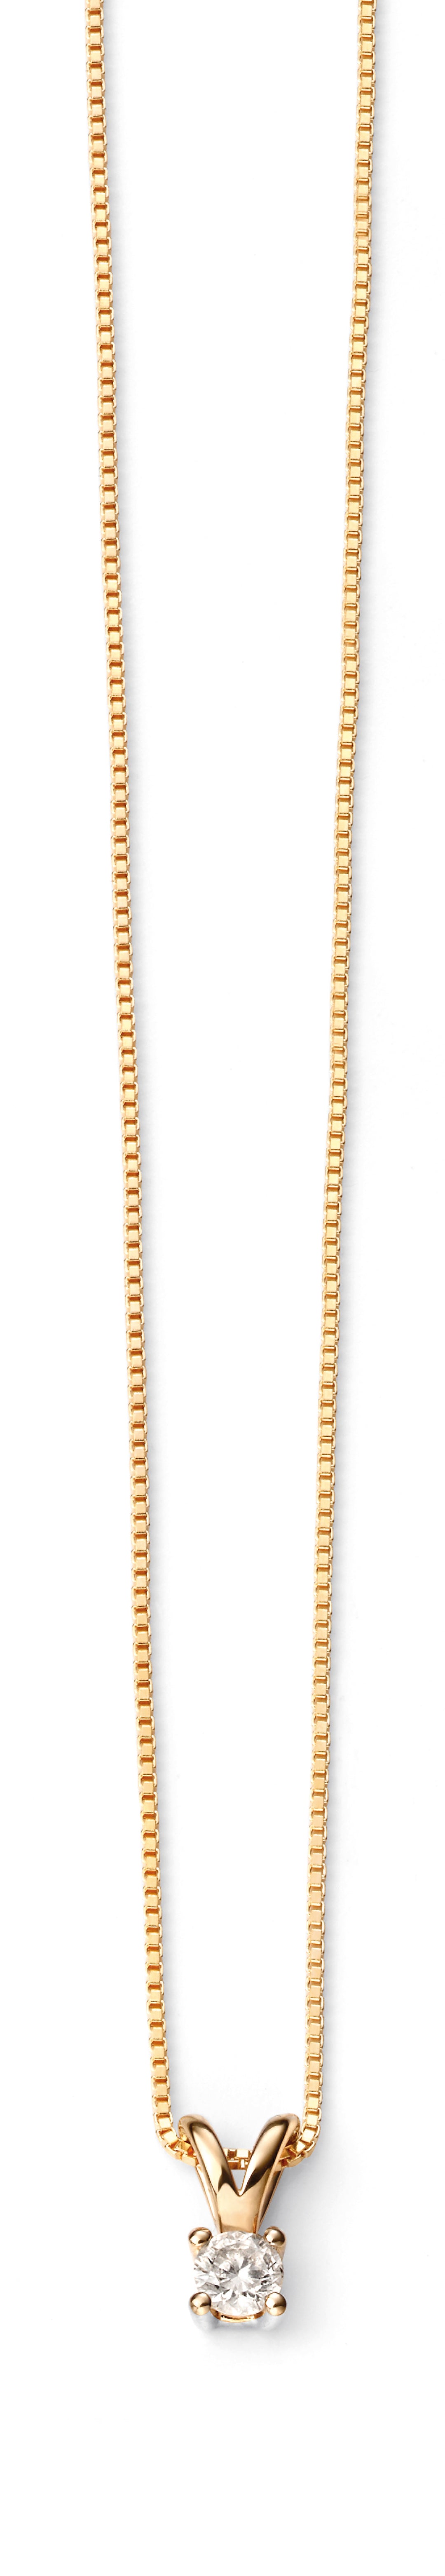 Penmans |  Solitaire Diamond pendant & Yellow Gold Chain